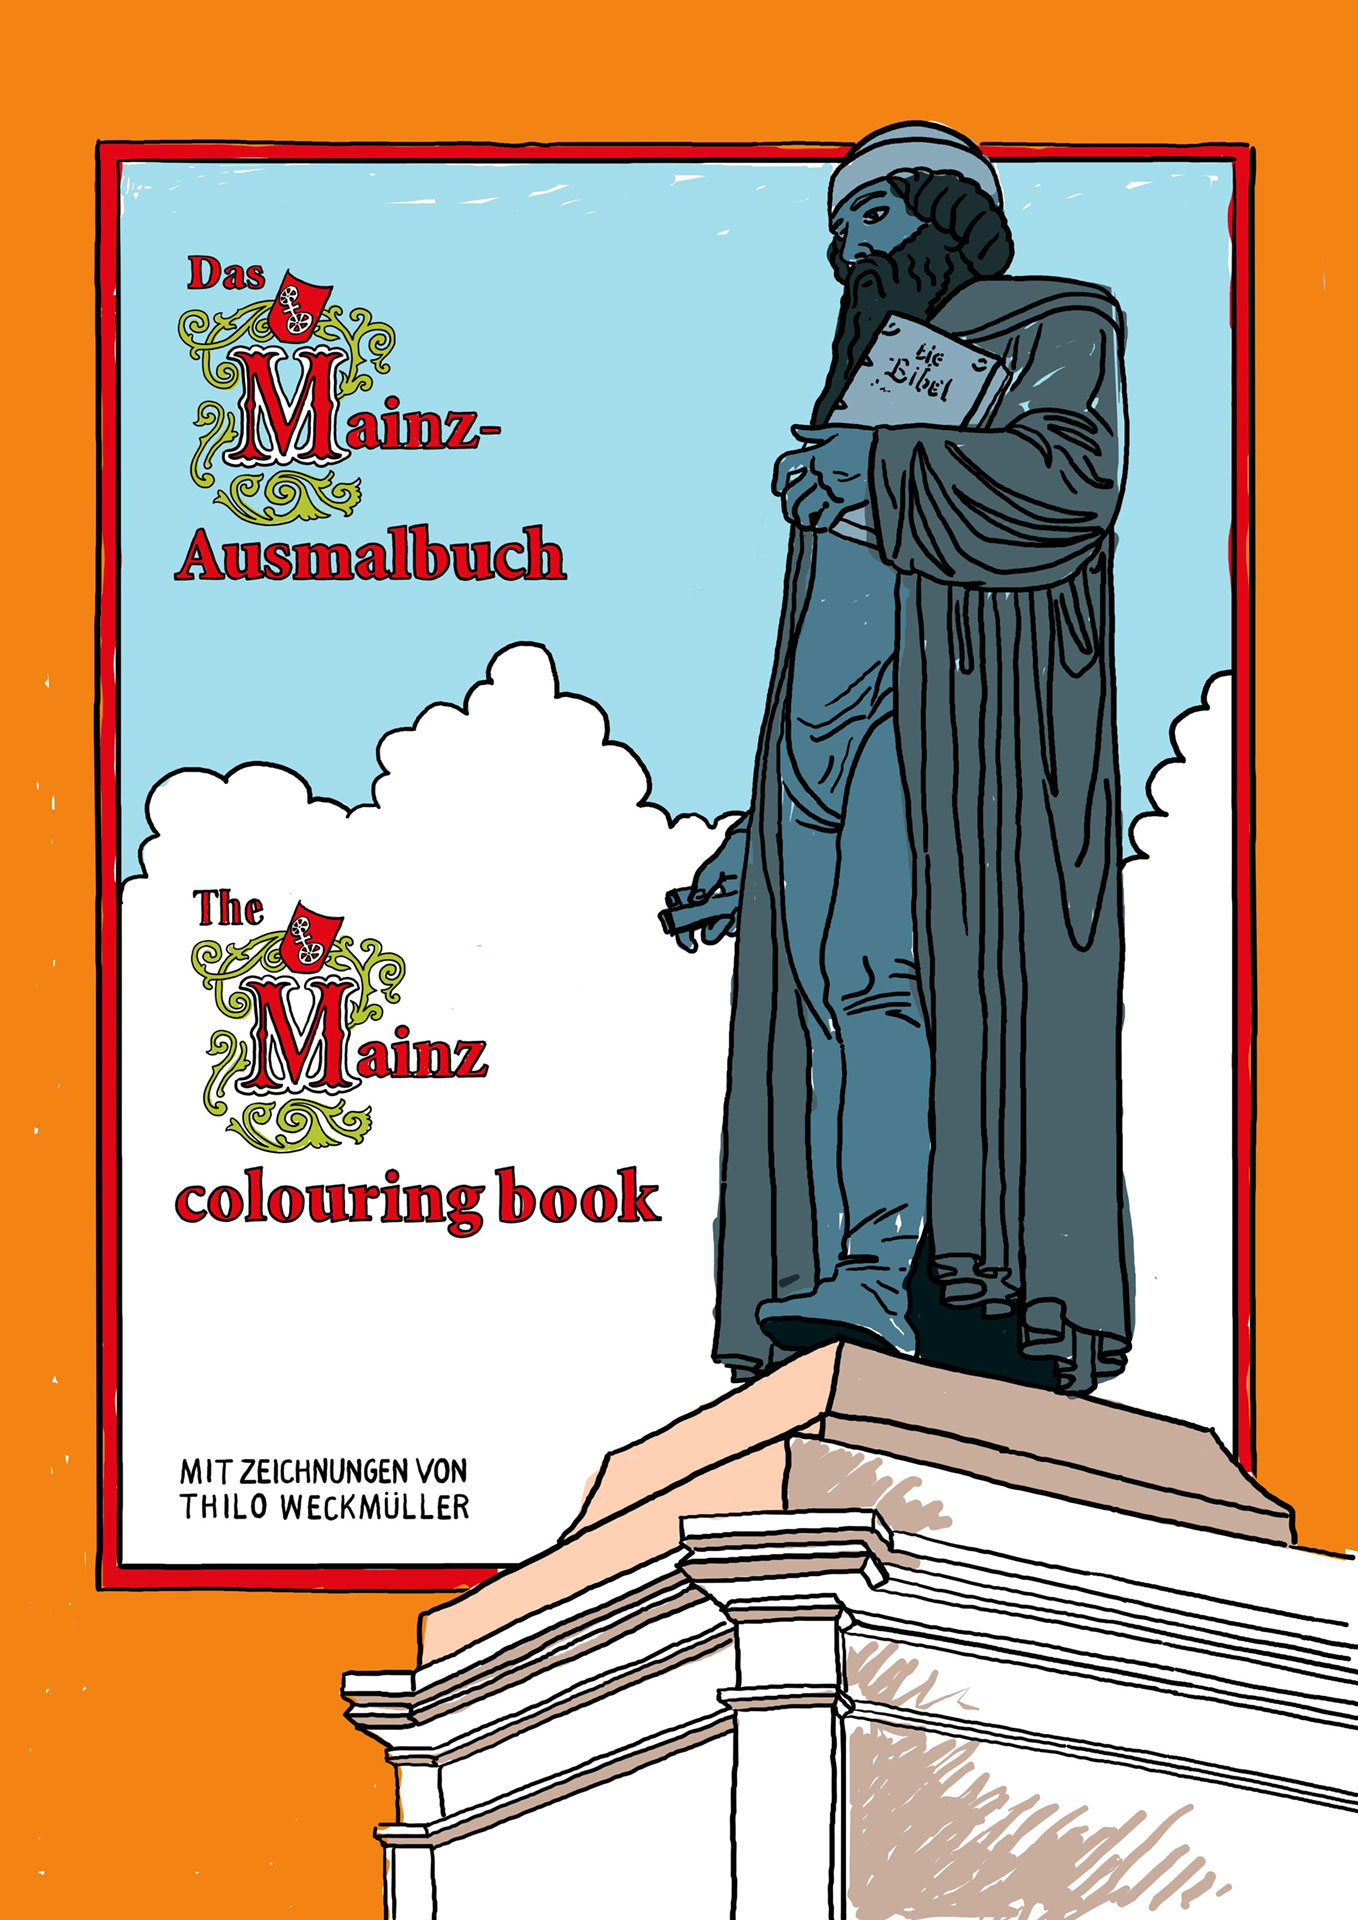 Das Mainz-Ausmalbuch / The Mainz colouring book